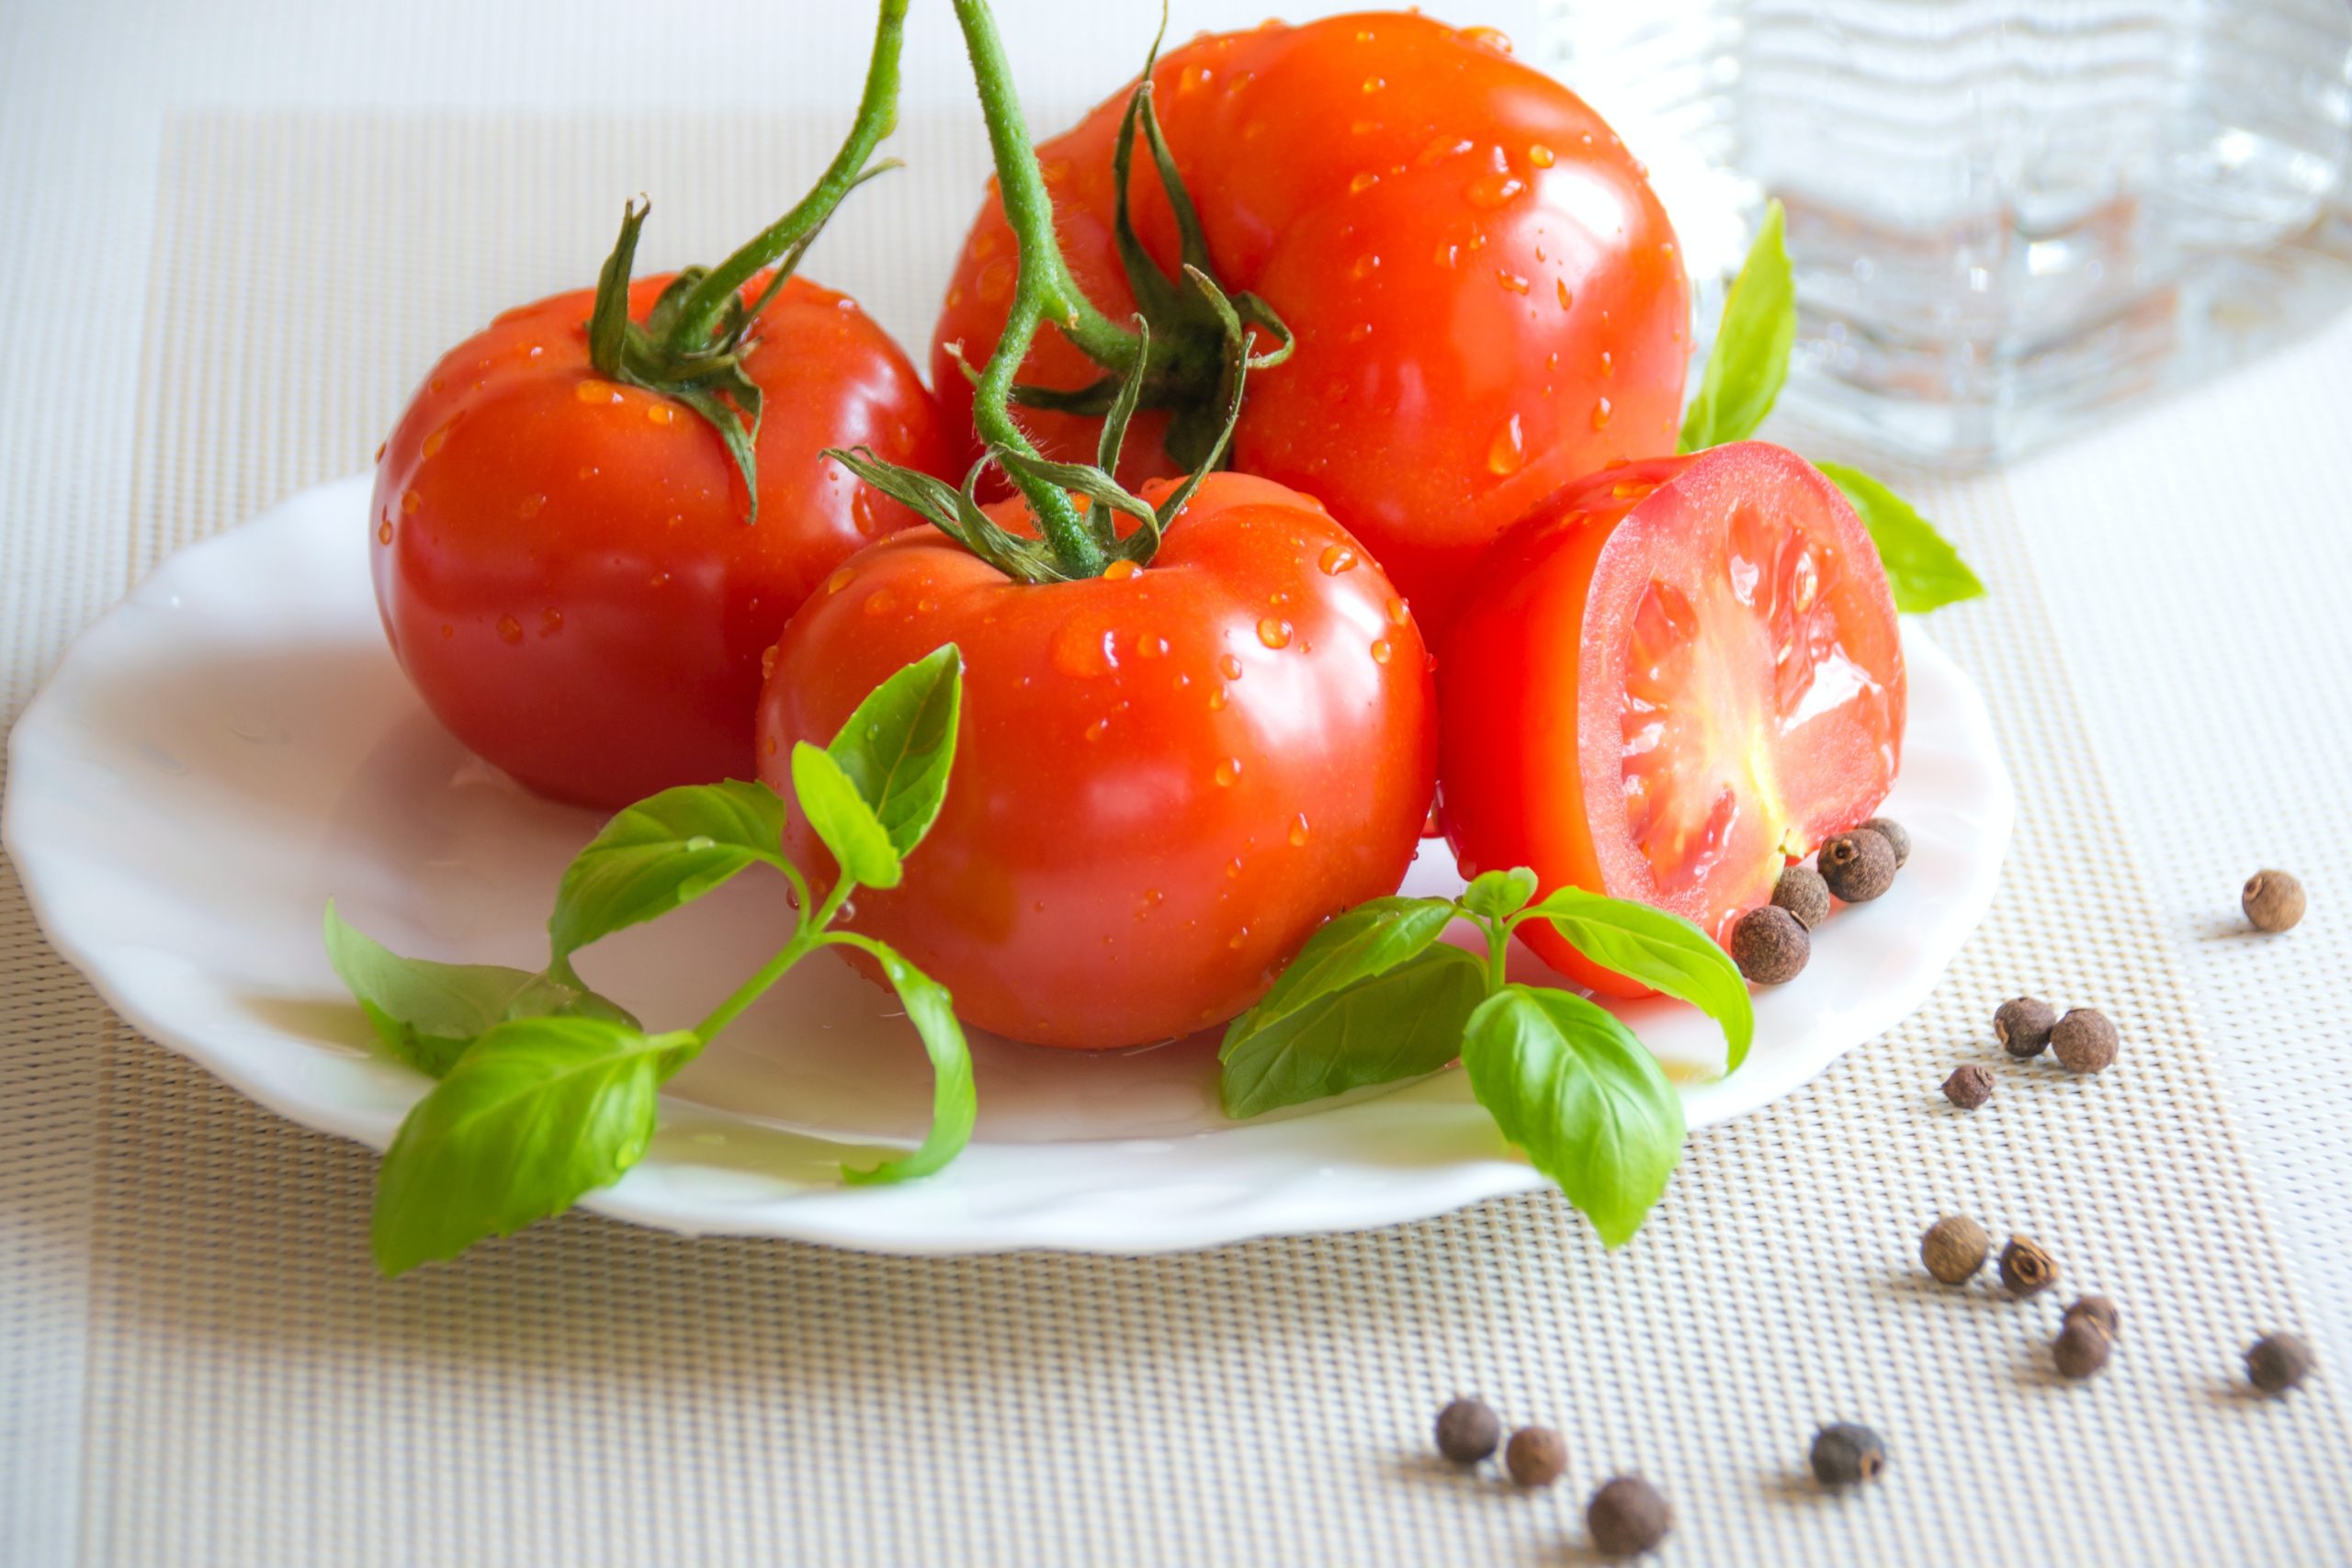 A plateful of fresh tomatoes